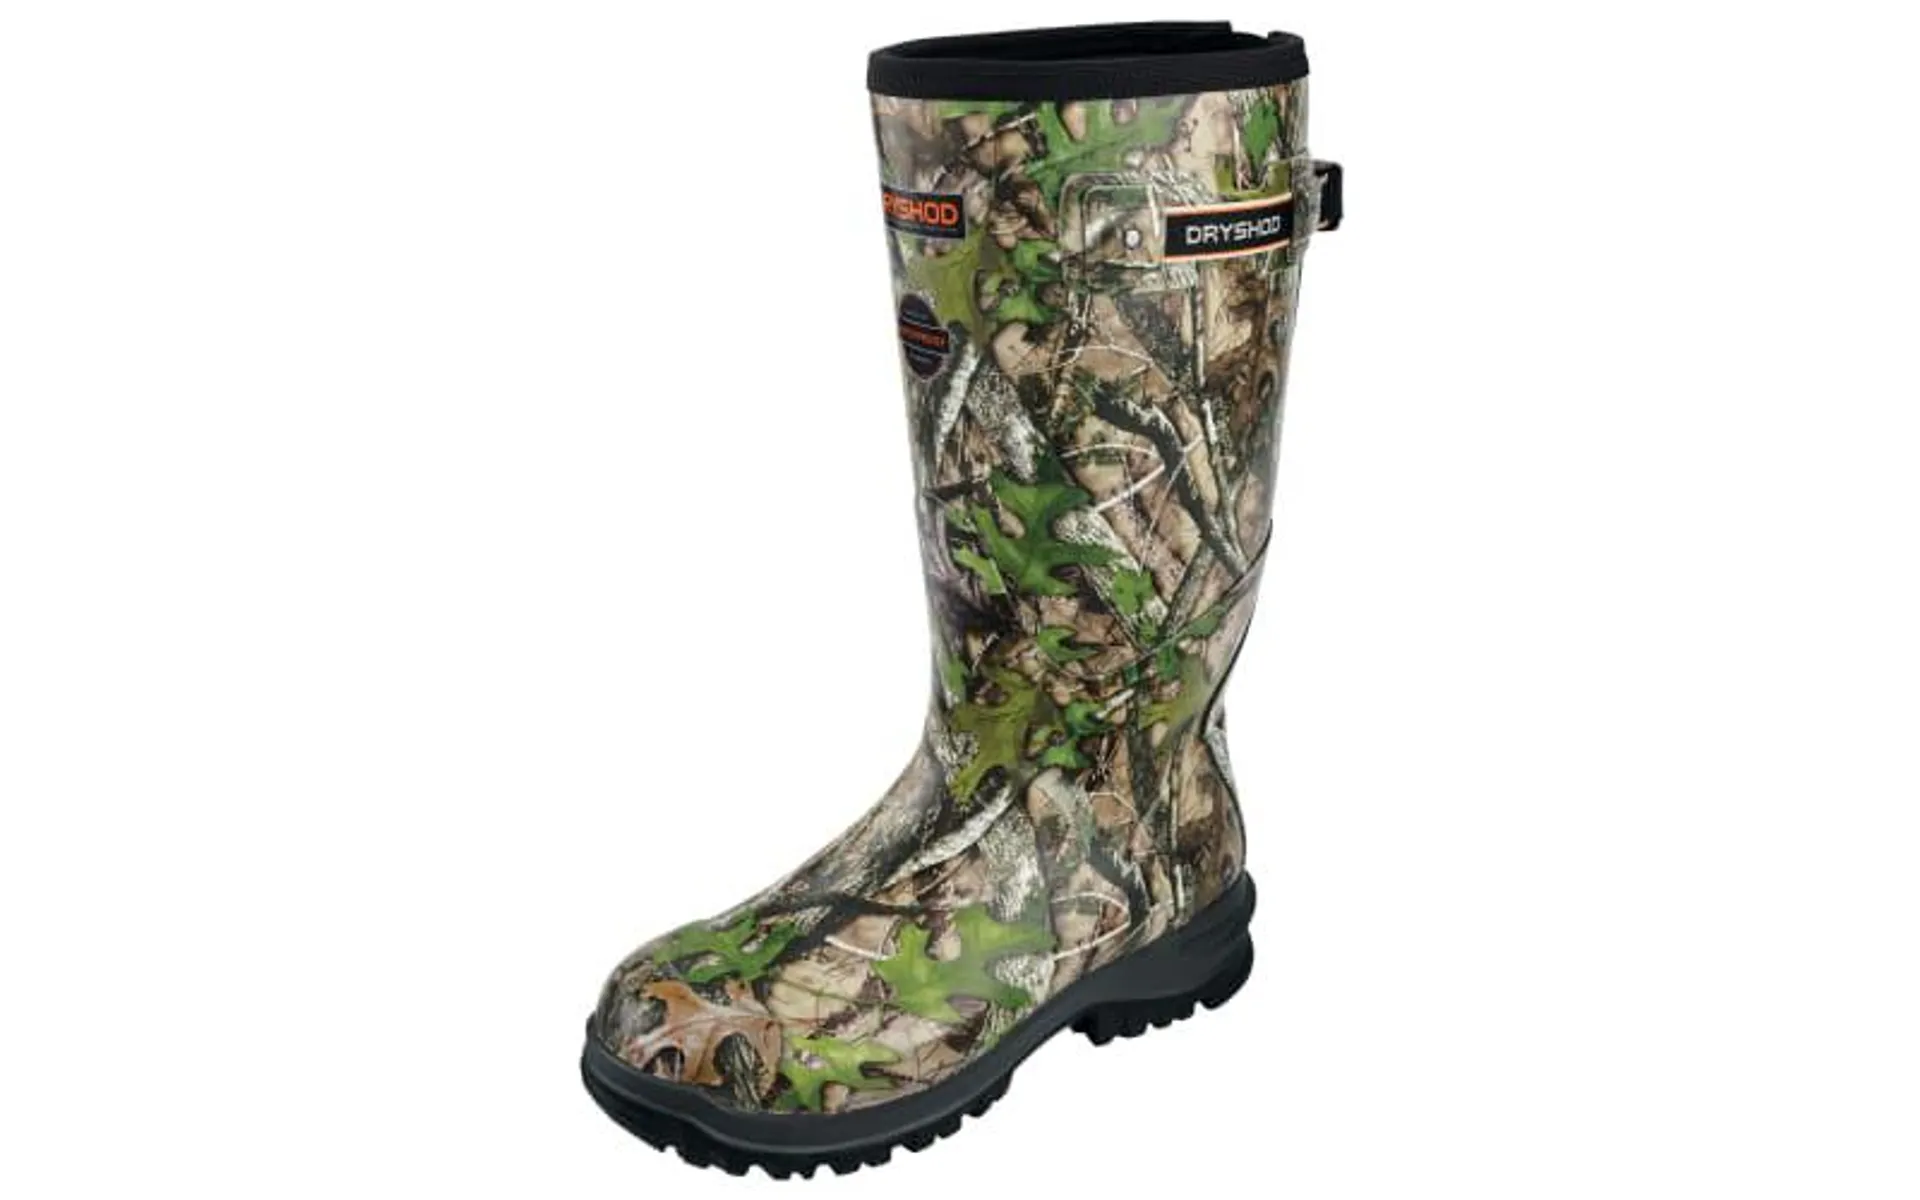 Dryshod Wingfoot XT Hunting Boots for Men